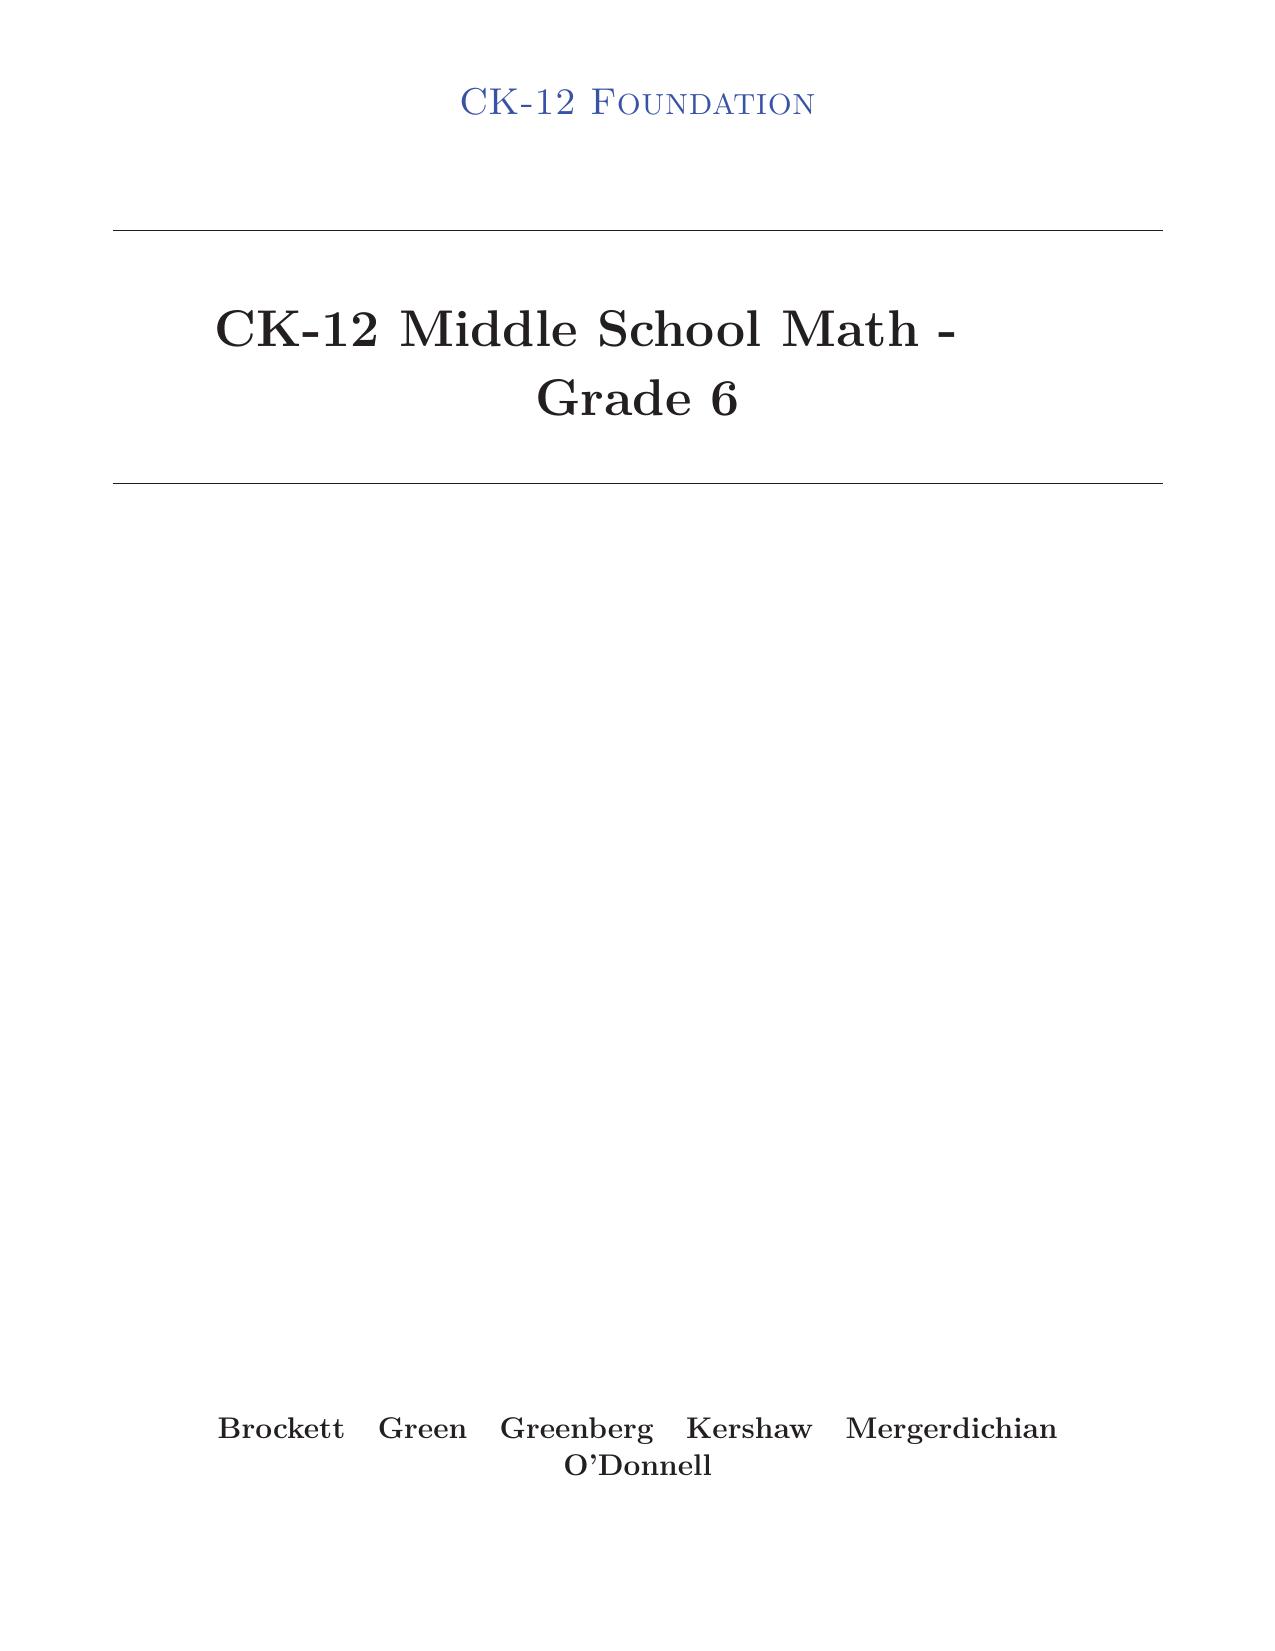 Middle School Math Grade6 Part1